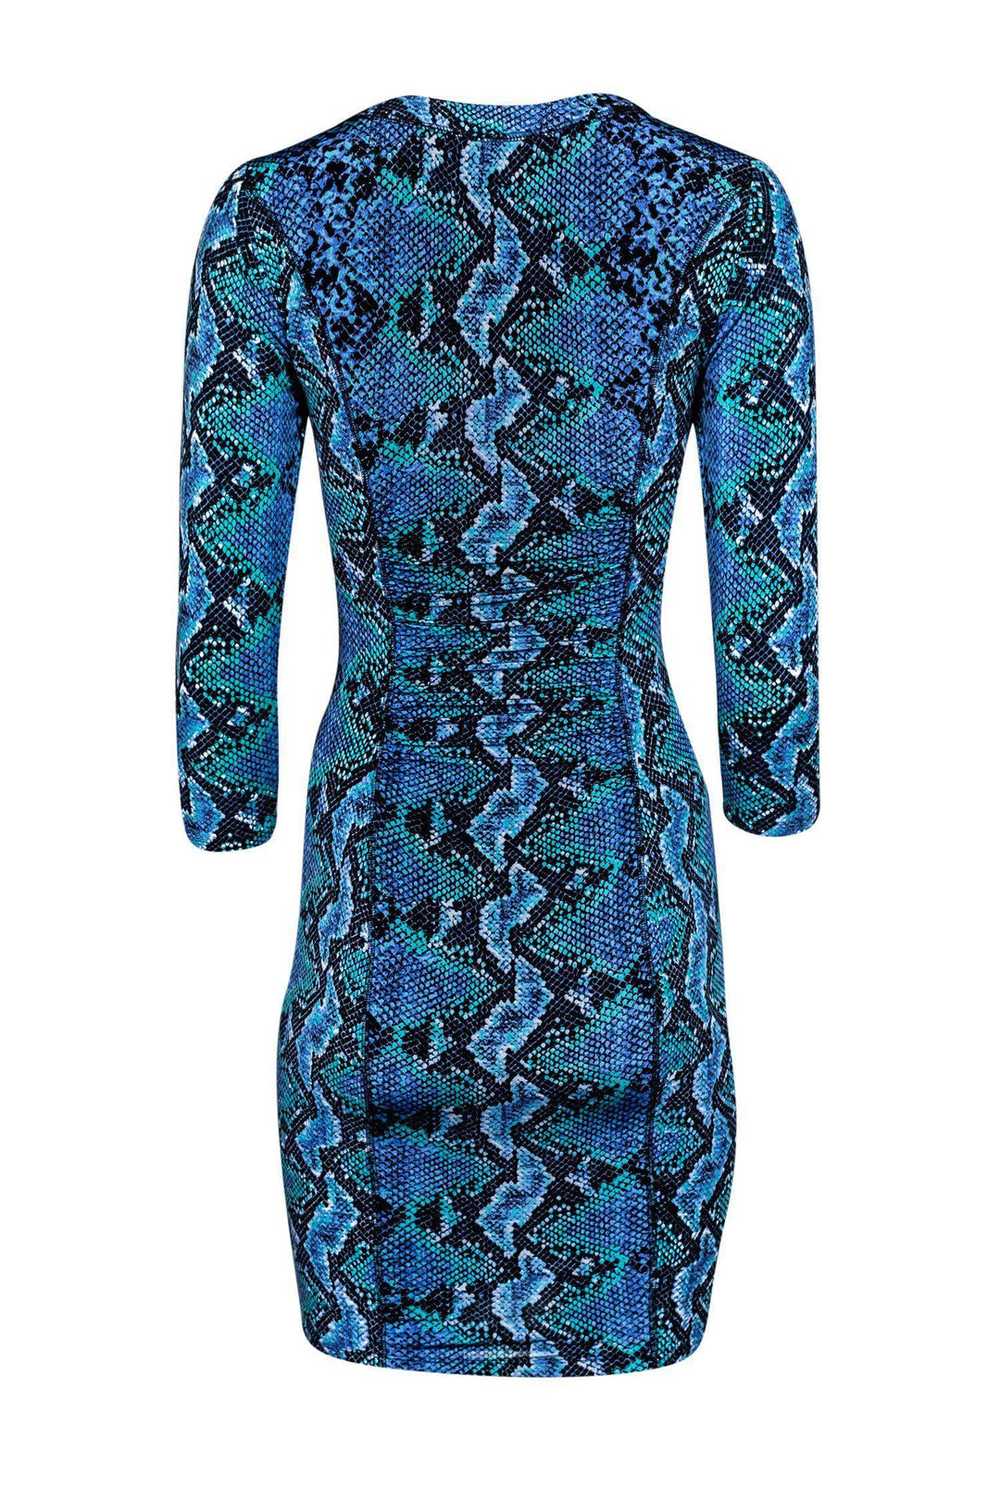 Tracy Reese - Blue & Teal Snake Print Dress Sz S - image 3